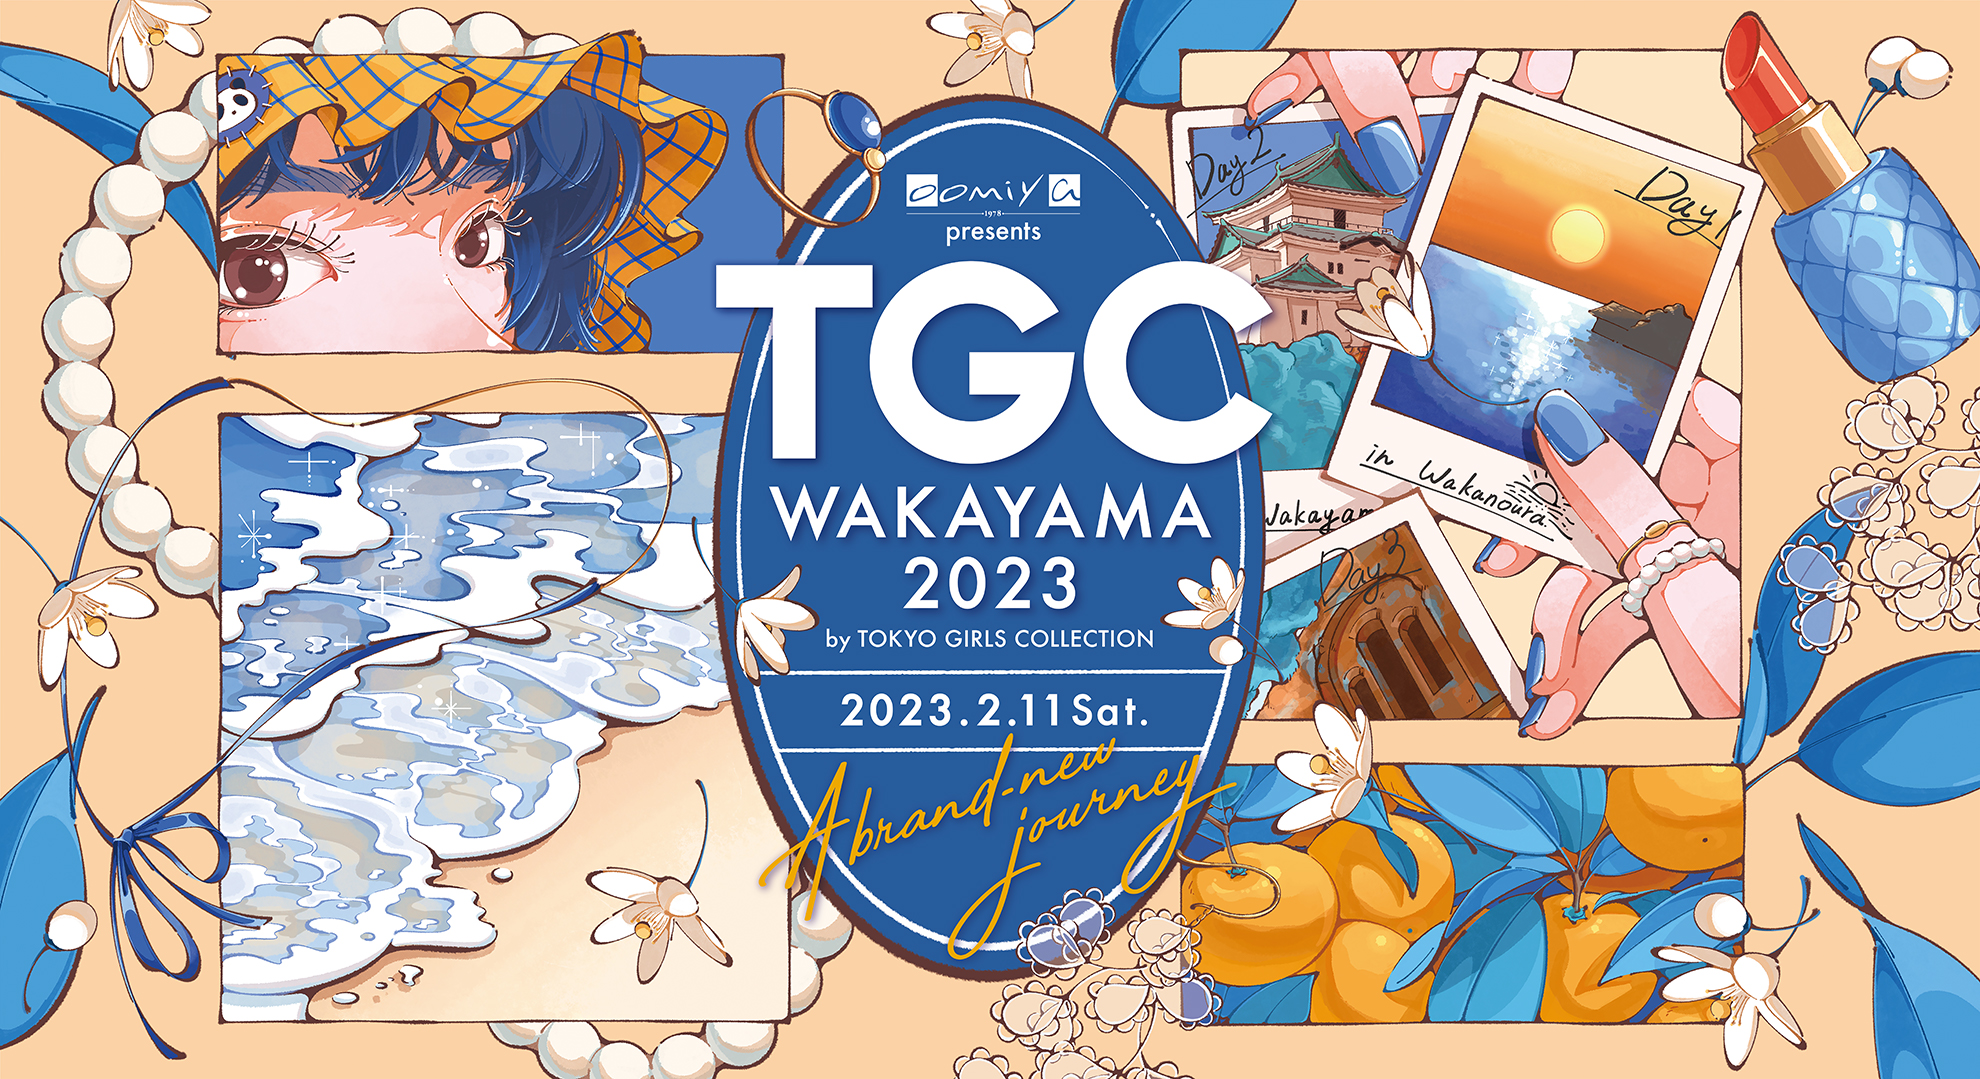 oomiya presents TGC WAKAYAMA 2023 by TOKYO GIRLS COLLECTION